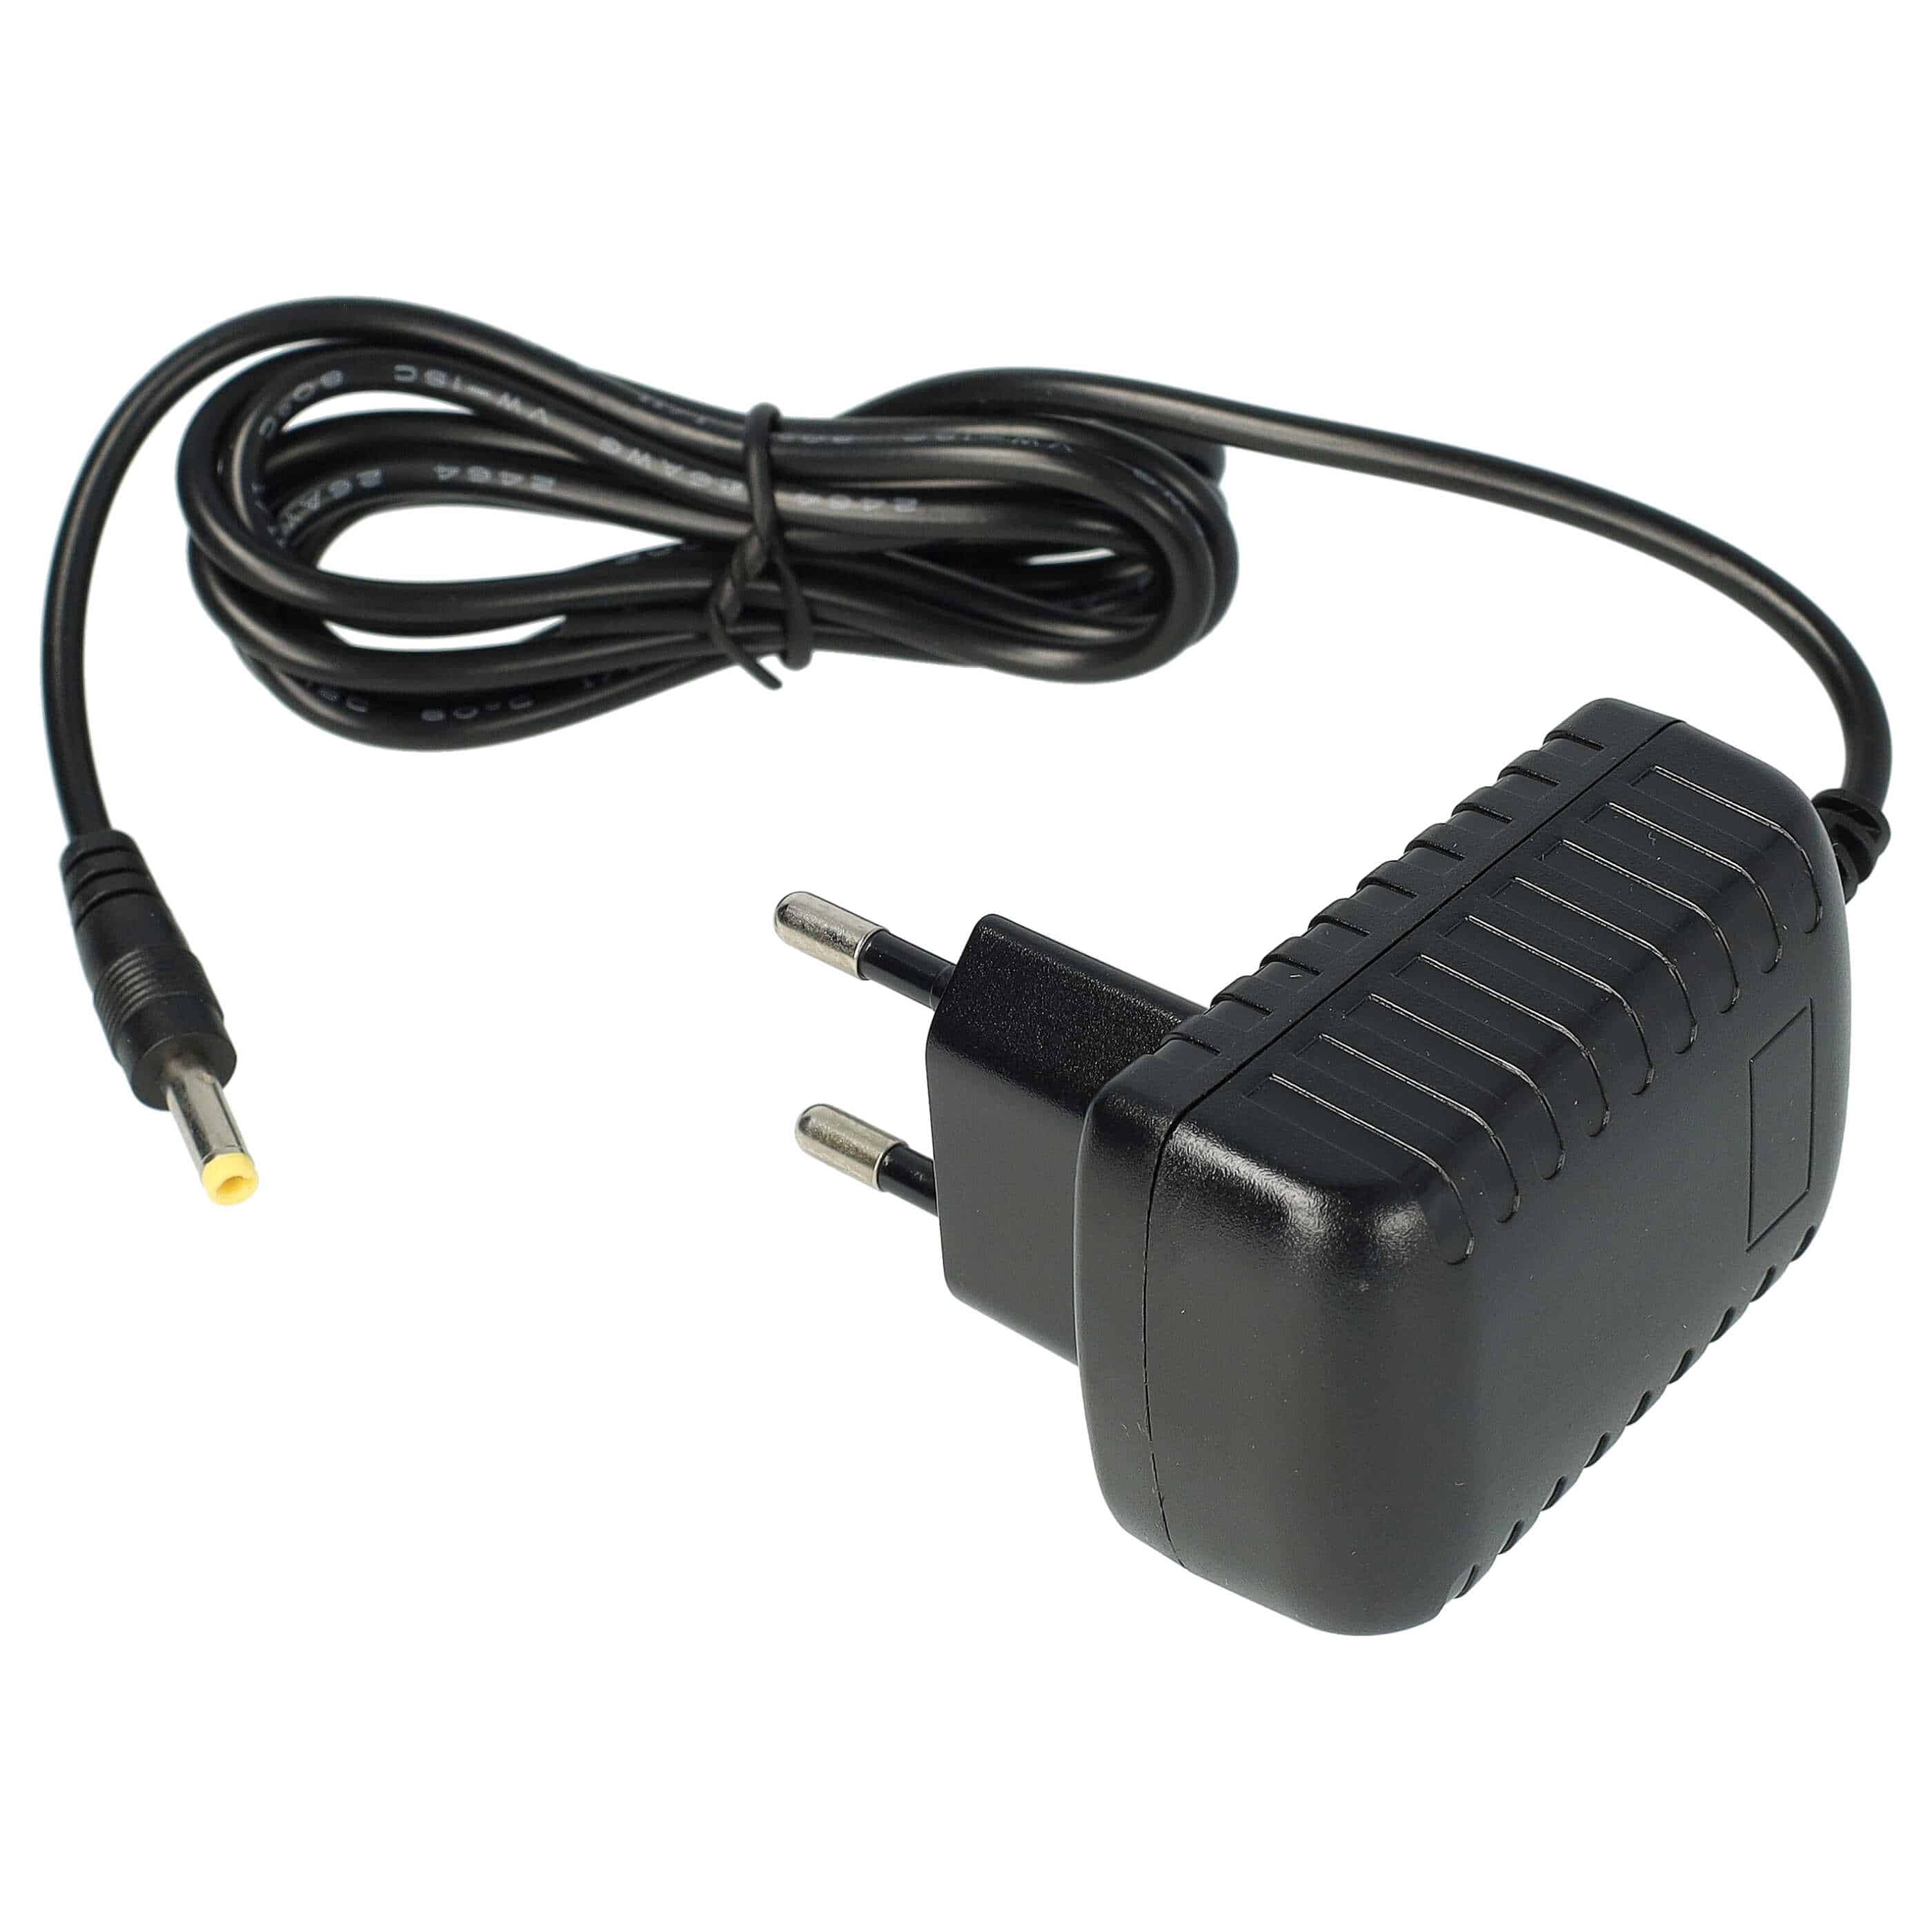 Mains Power Adapter replaces Black & Decker 90500856-01 for Black & Decker Power Tool